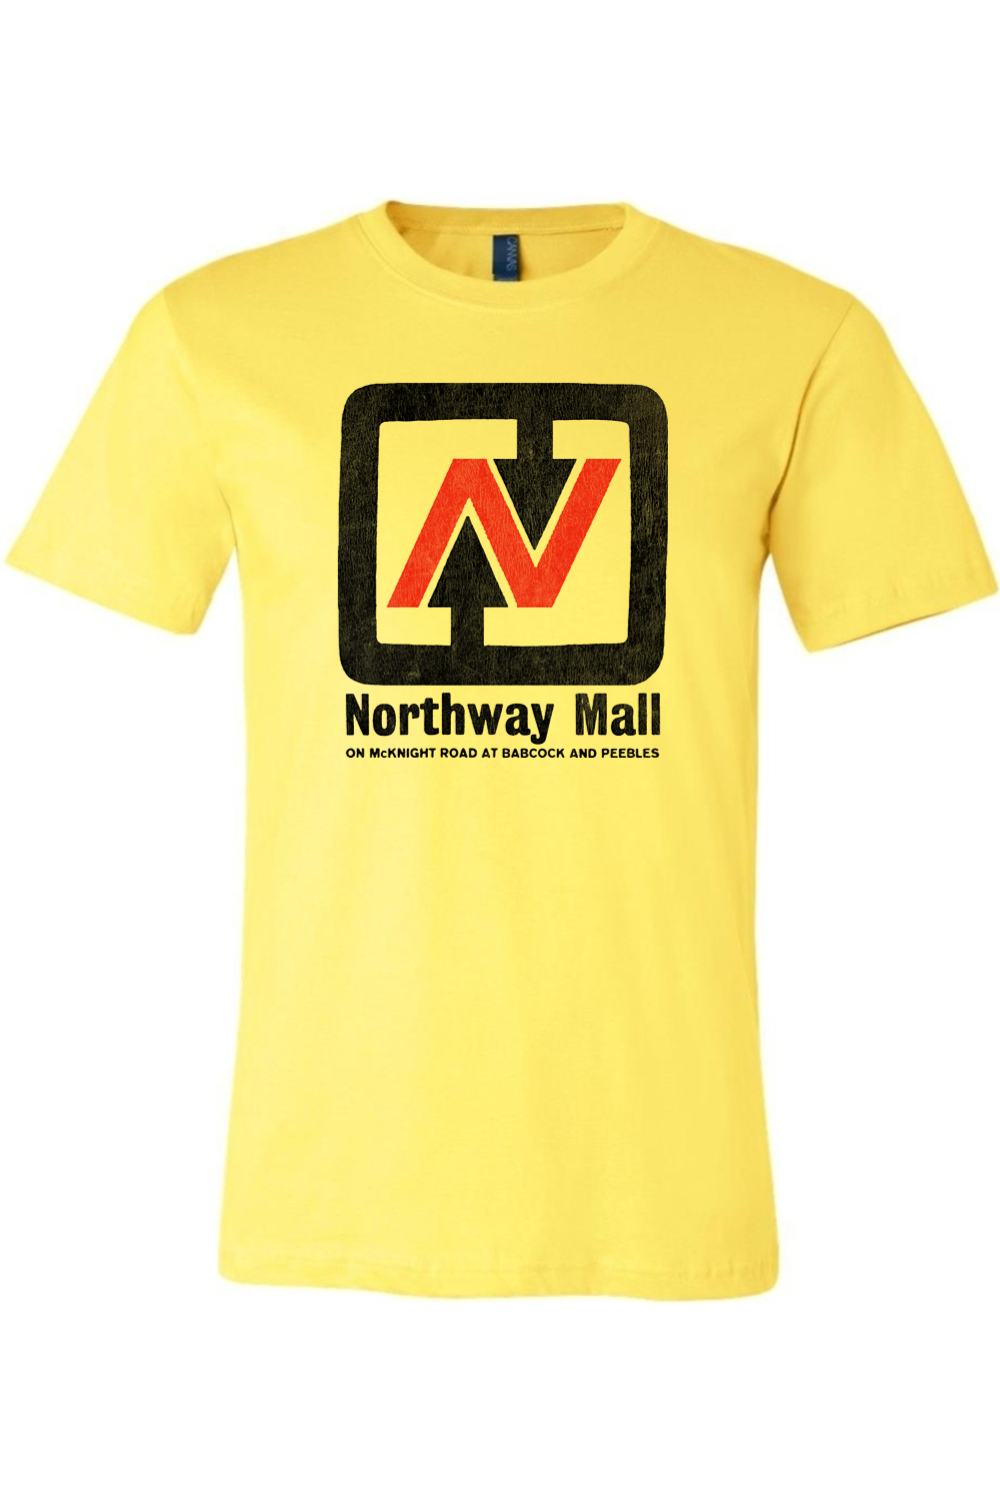 Northway Mall - North Hills - Yinzylvania